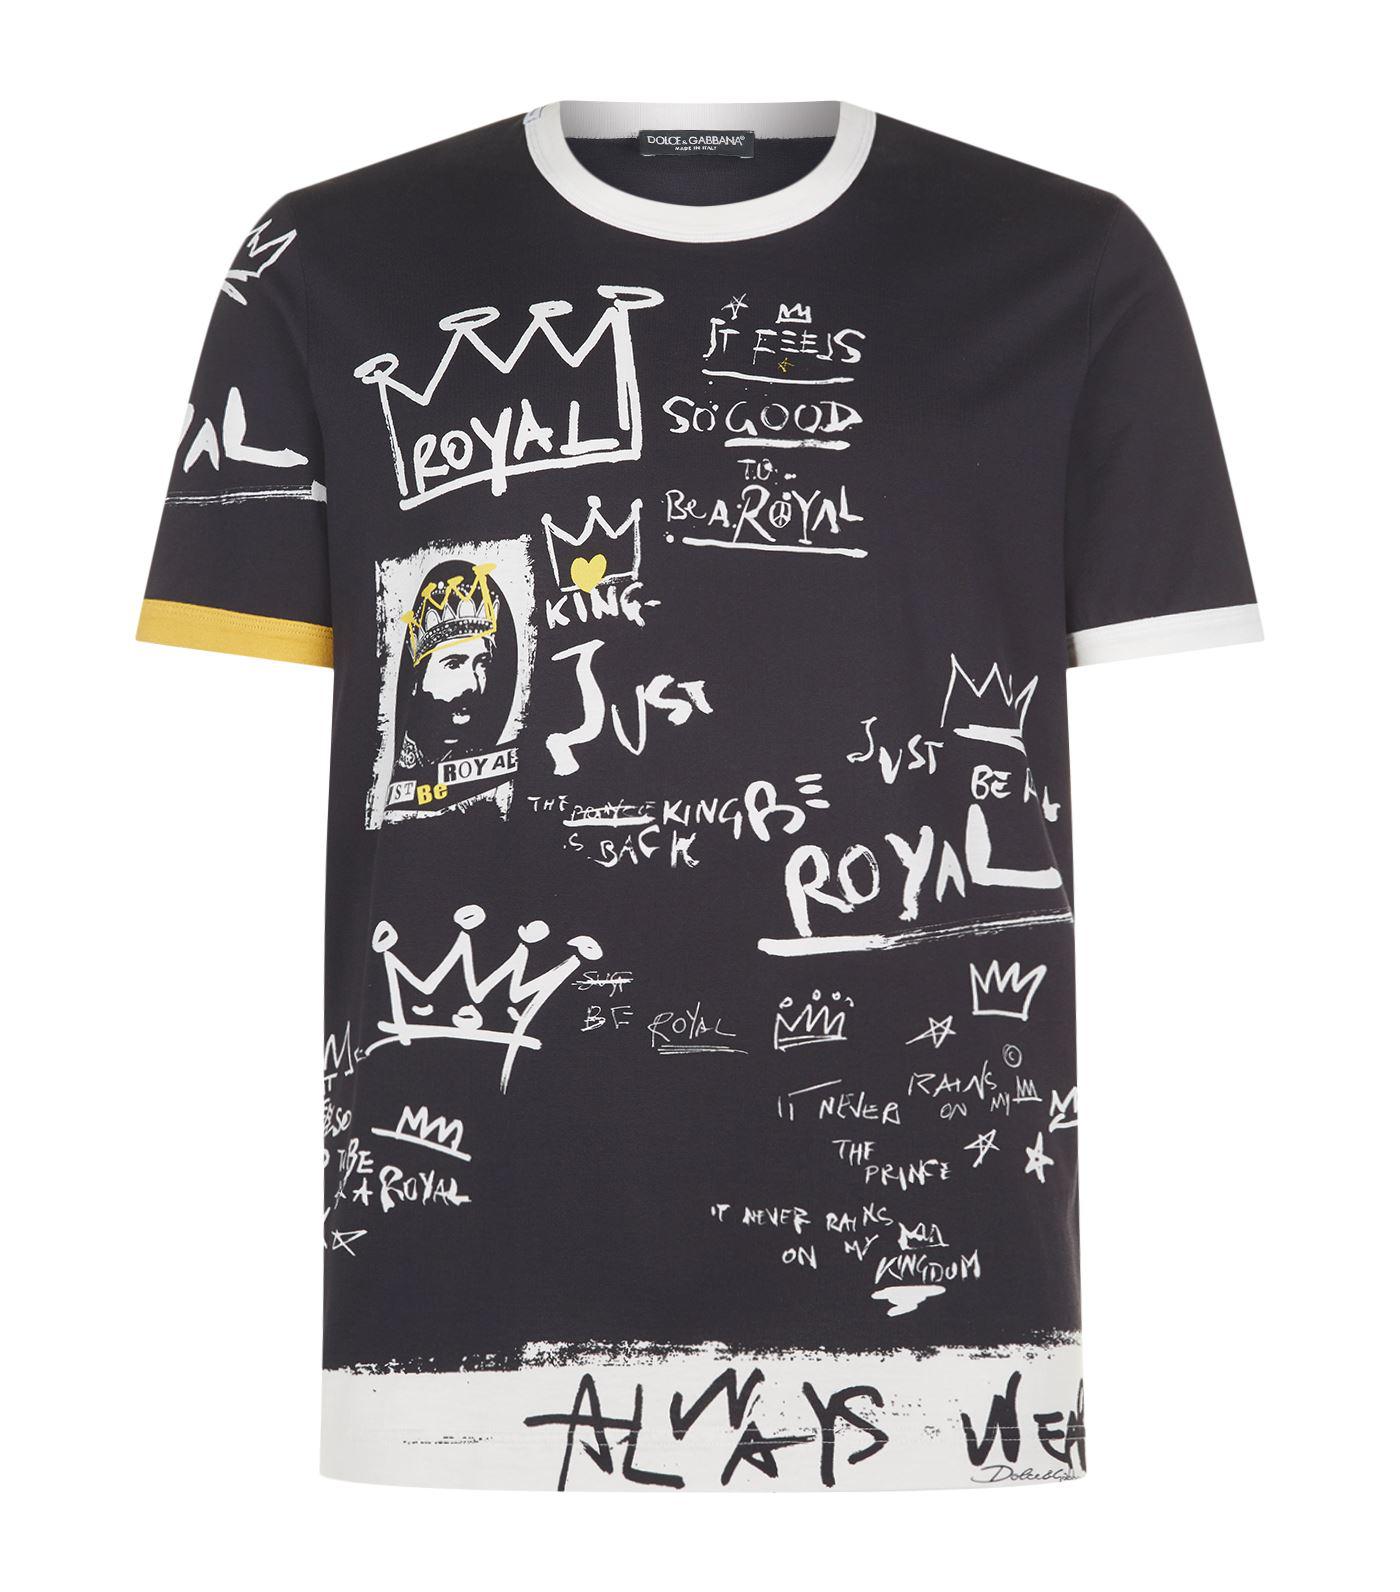 Dolce & Gabbana Cotton Royal Graffiti Print T-shirt in Black for Men - Lyst